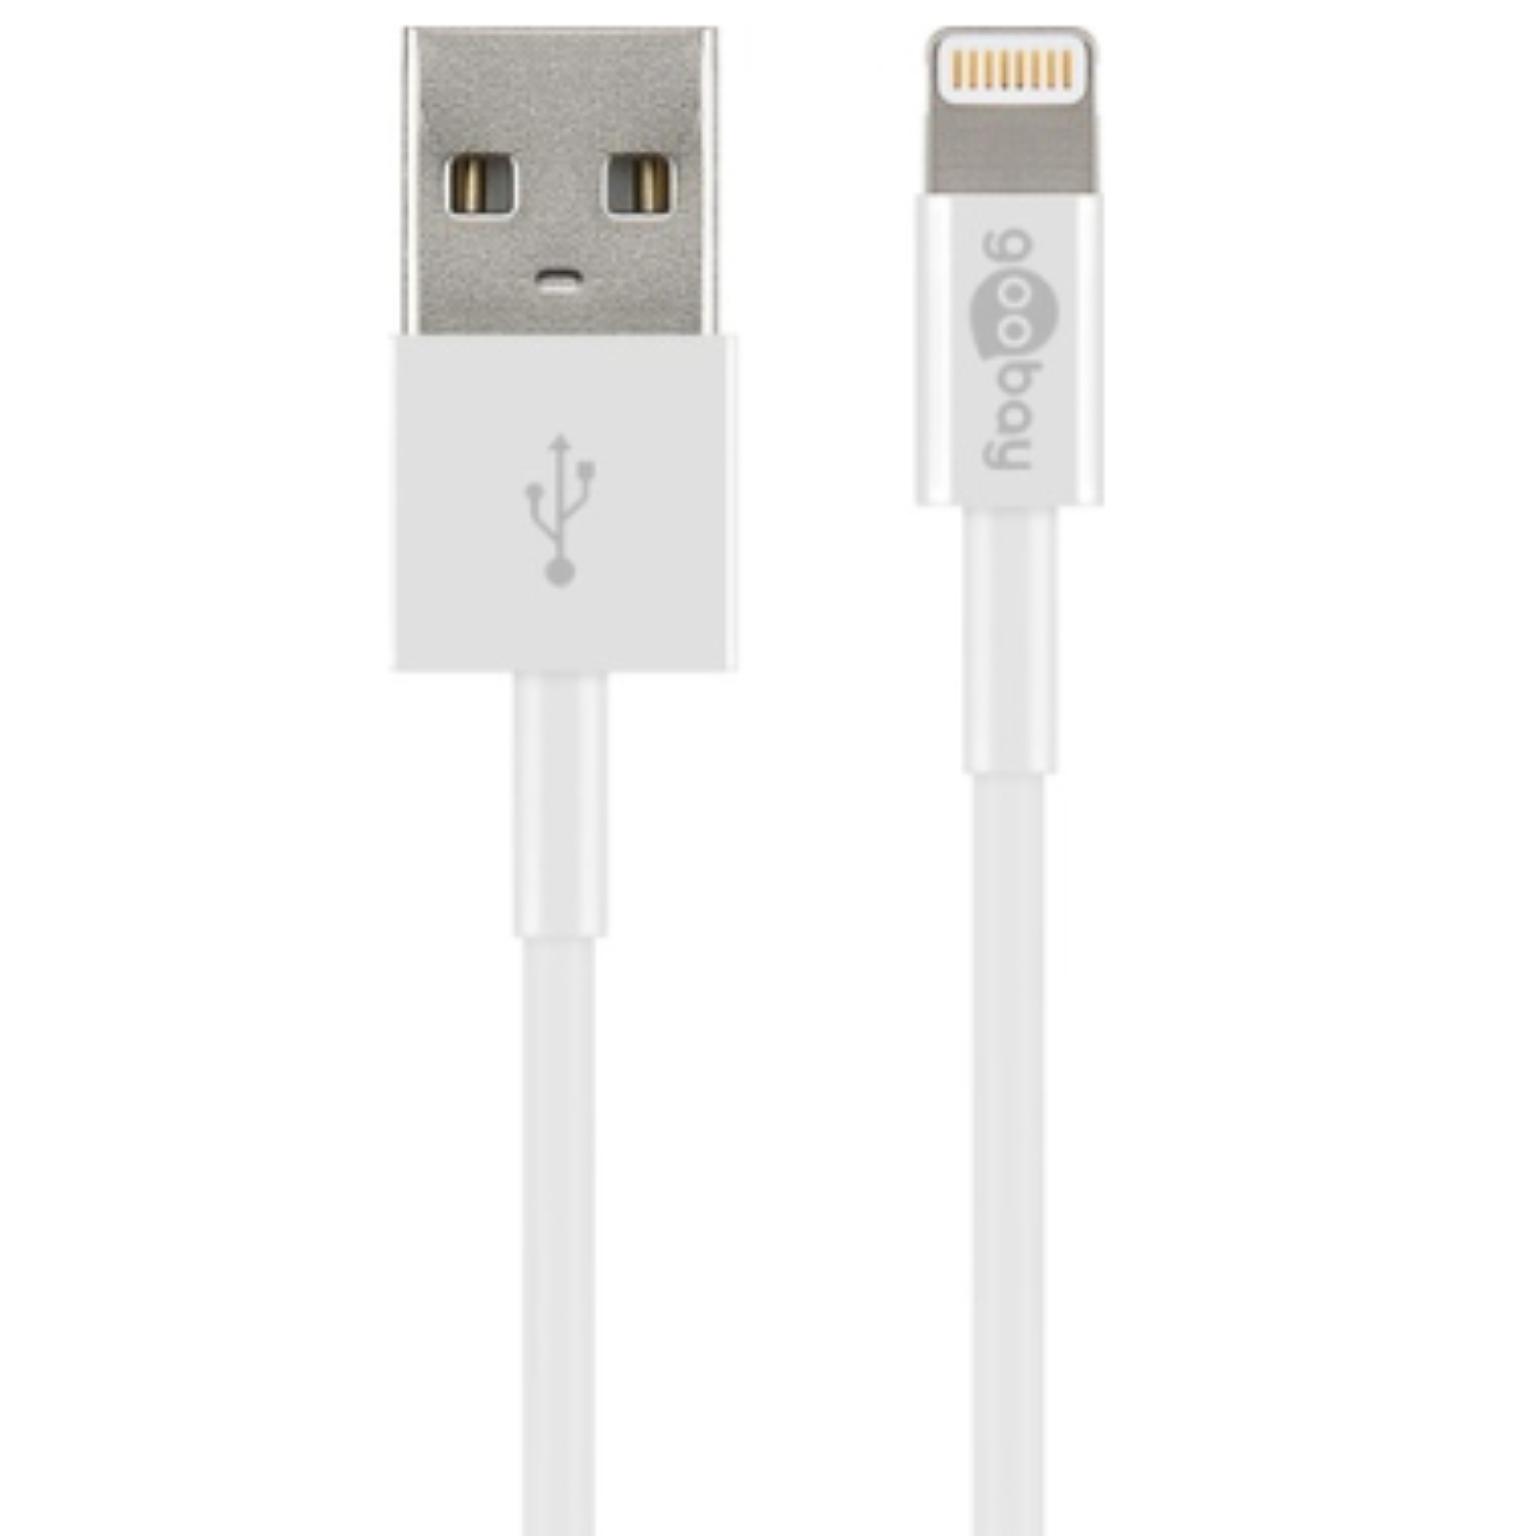 Lightning Kabel - USB Versie: 2.0 - HighSpeed, Aansluiting 1: Lightning 2: USB A 2.0 male. 0.5 meter.